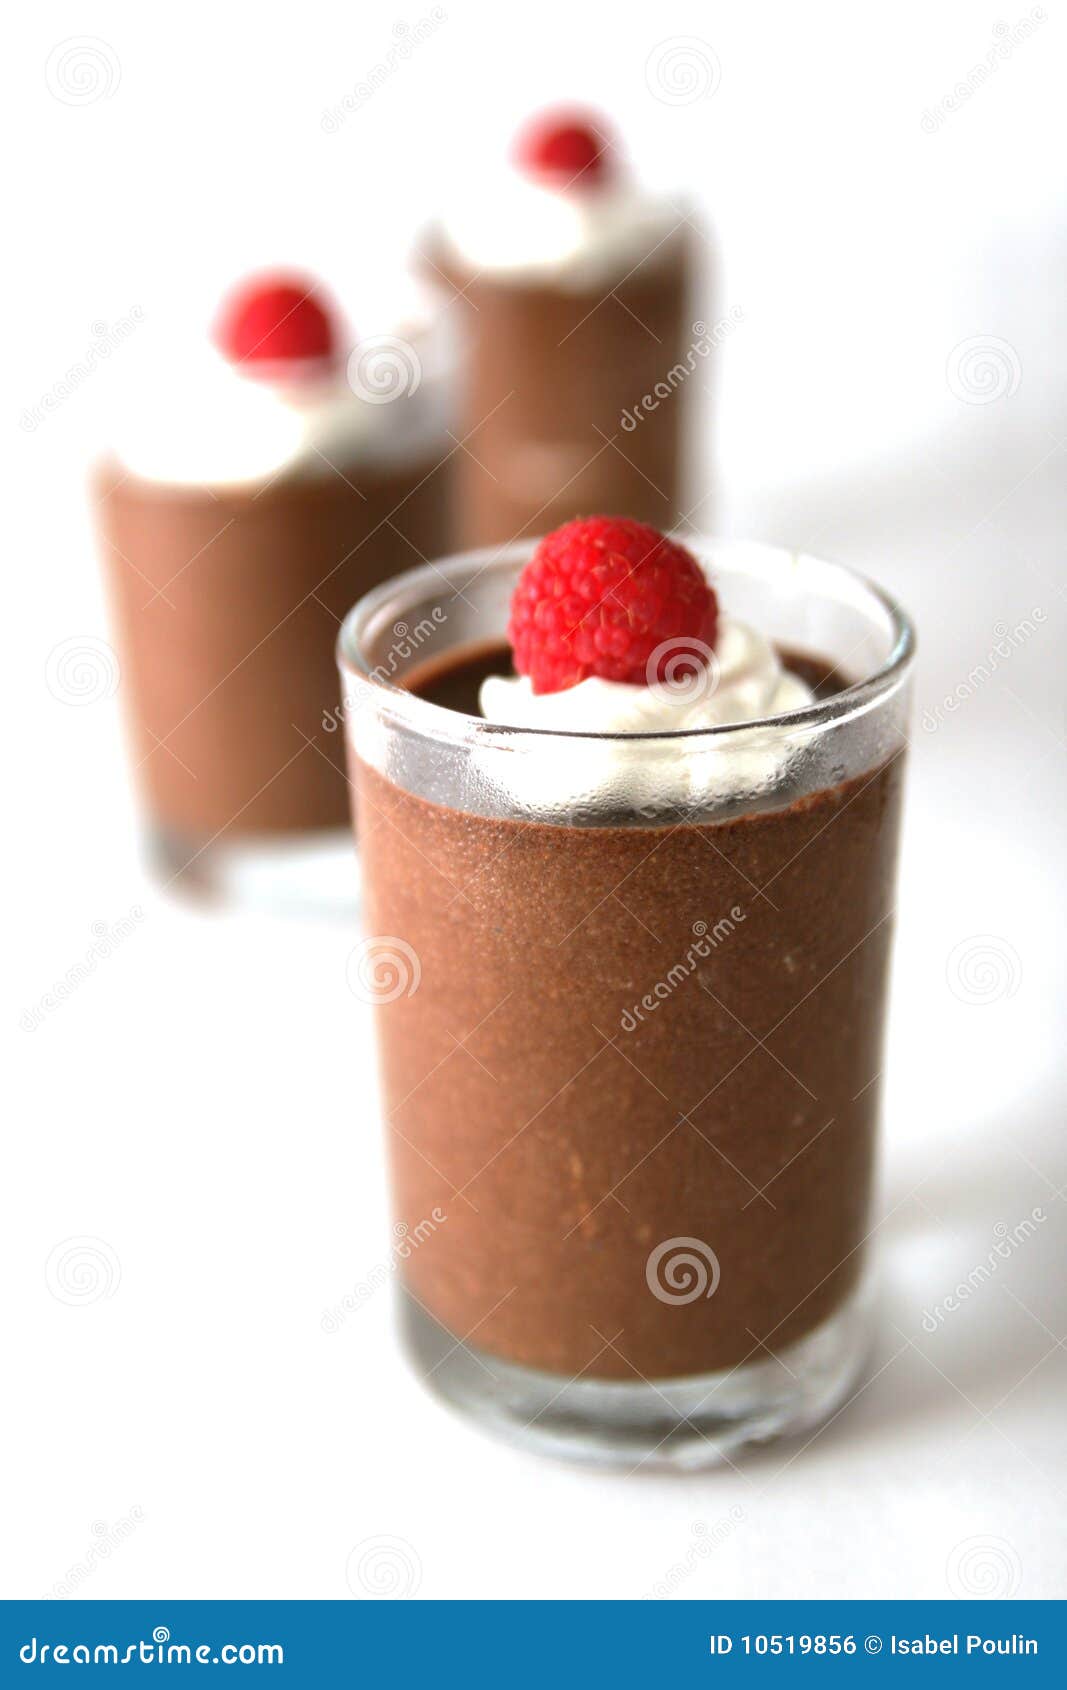 Chocolate mousse stock photo. Image of ready, food, white - 10519856